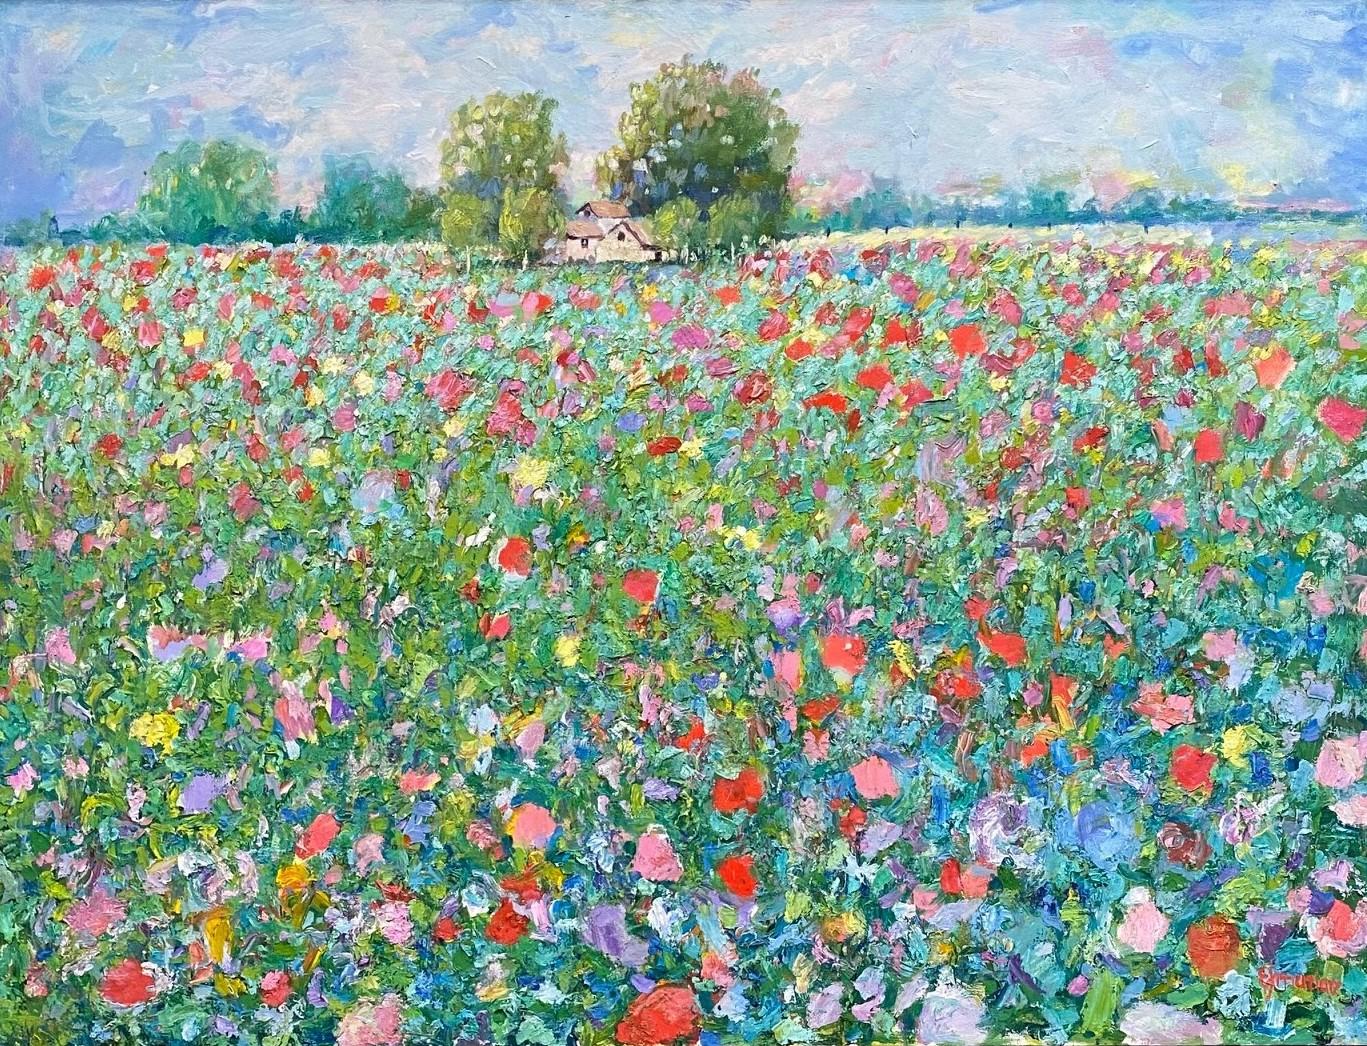 Homestead of Flowers, paysage impressionniste français contemporain original 30x40 - Painting de Eugene Maziarz